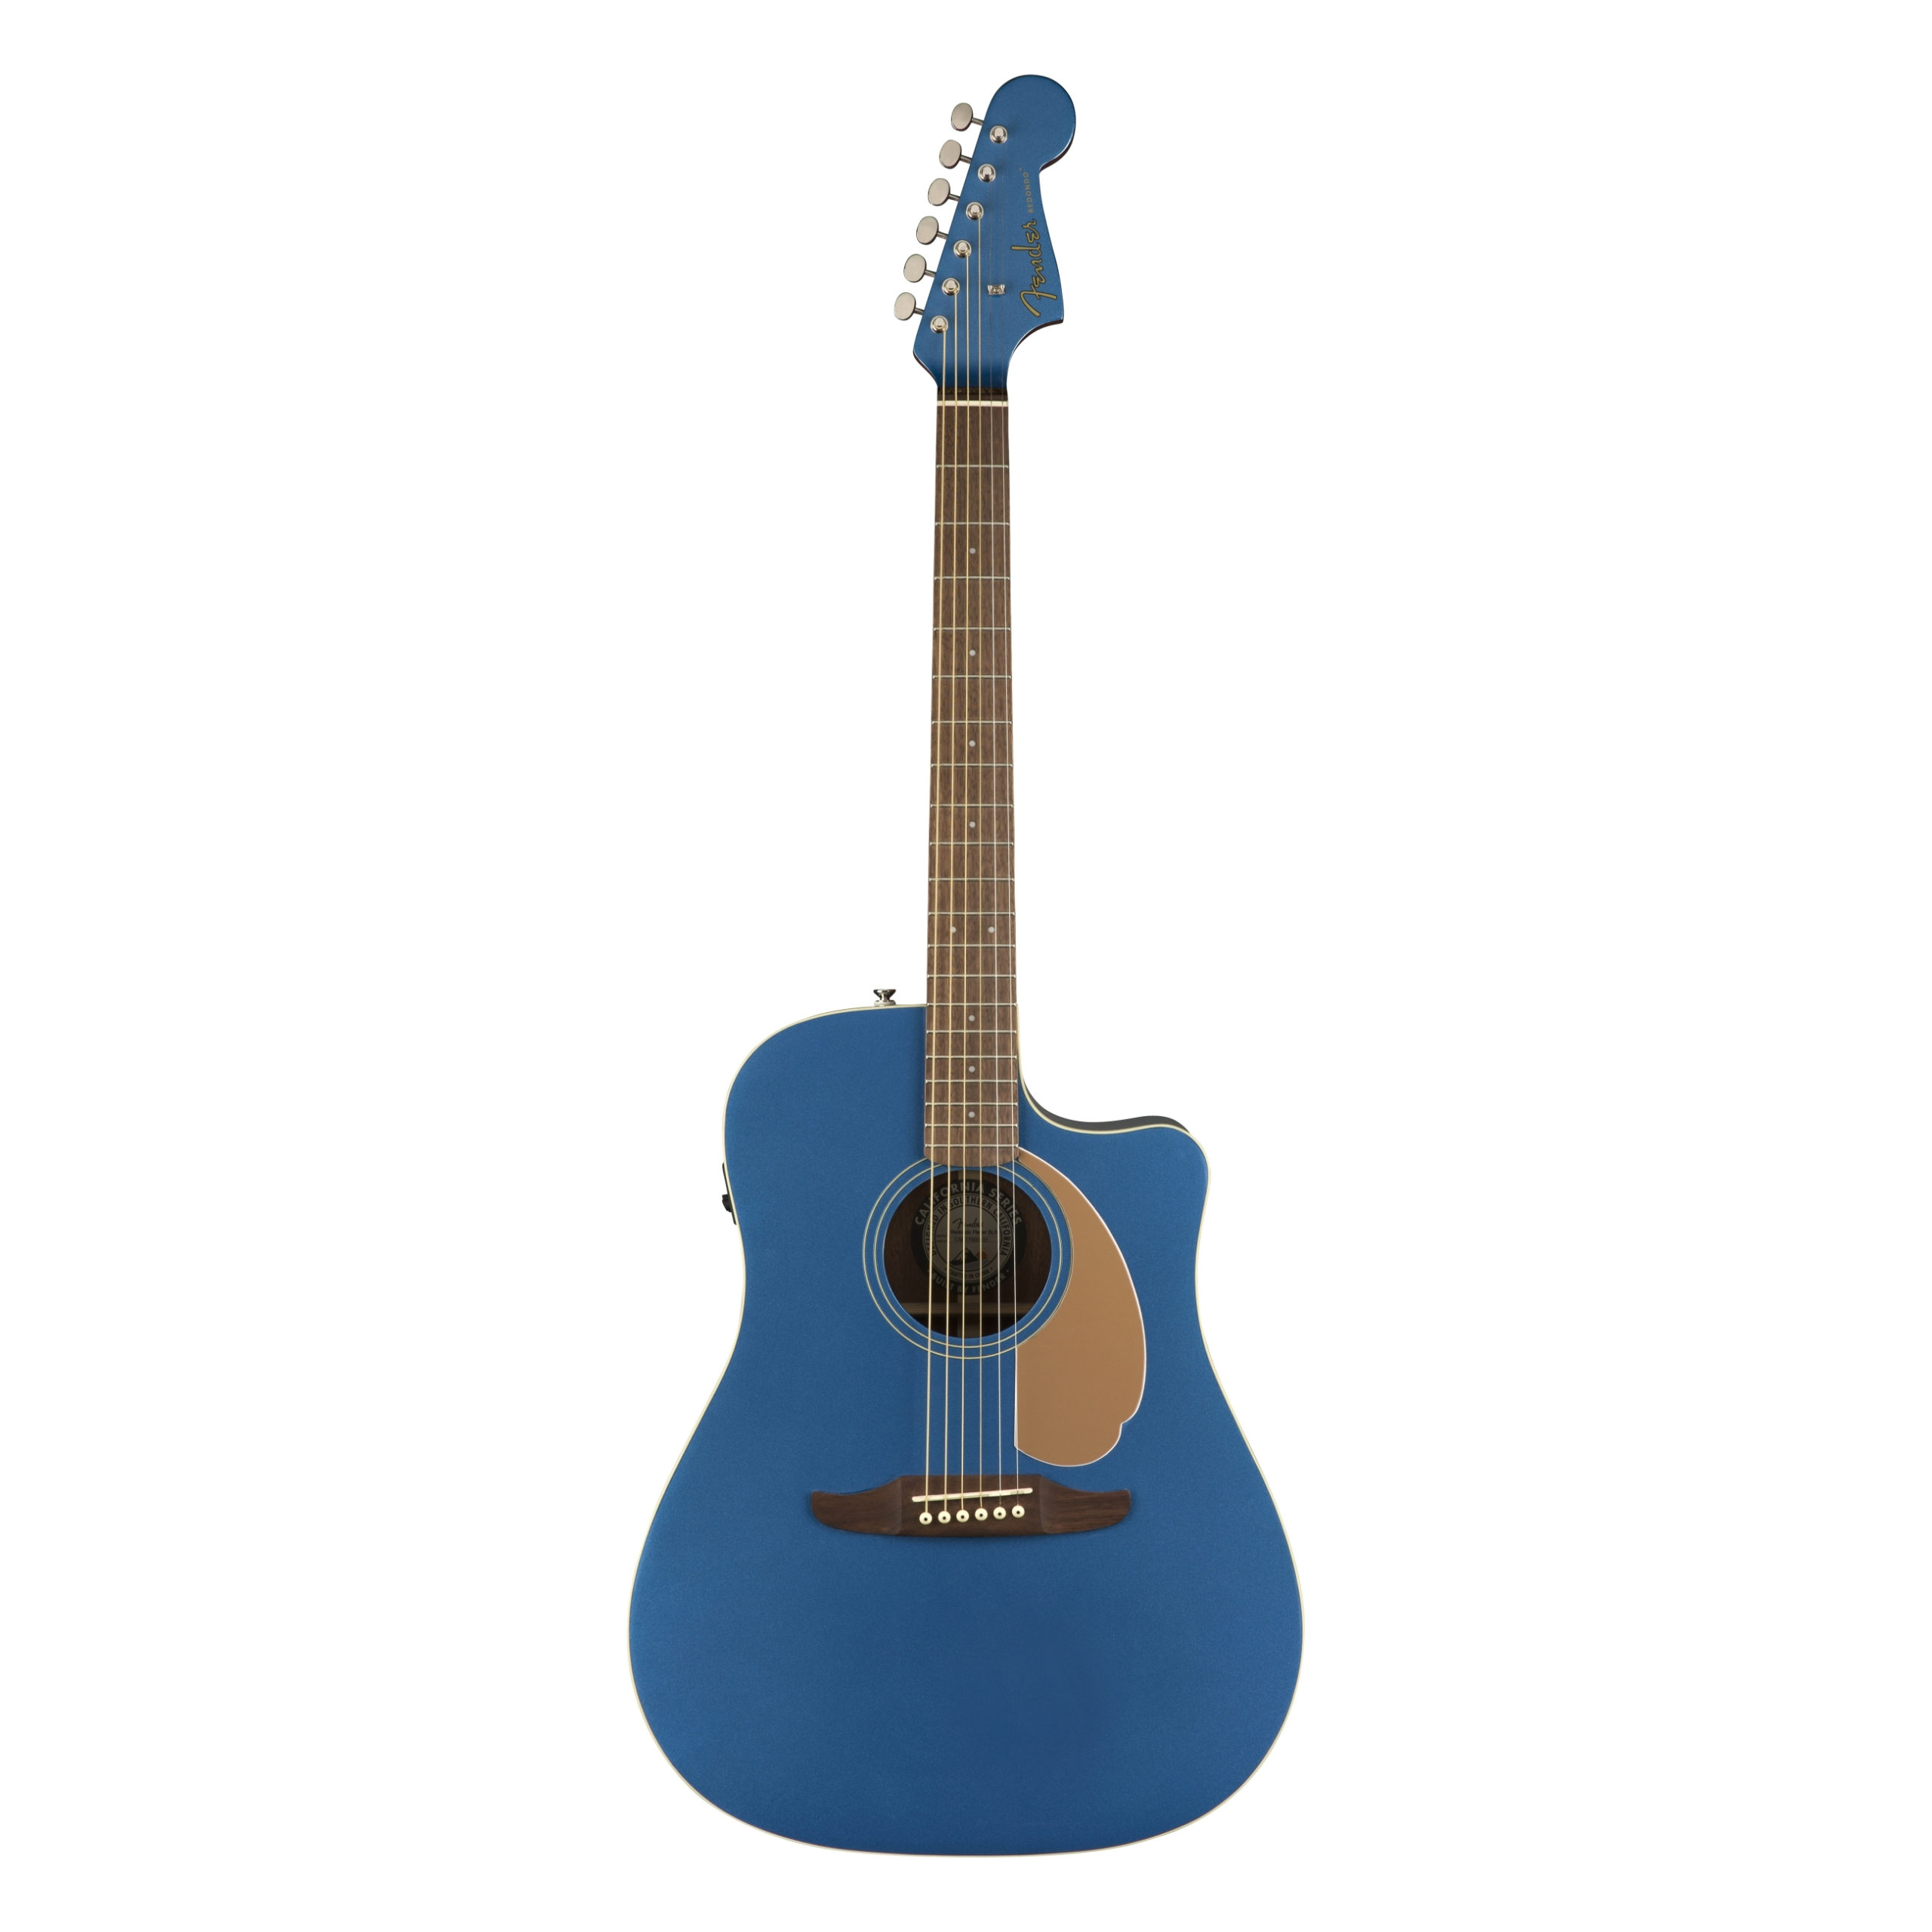 Fender Redondo Player, Walnut Fingerboard, Belmont Blue